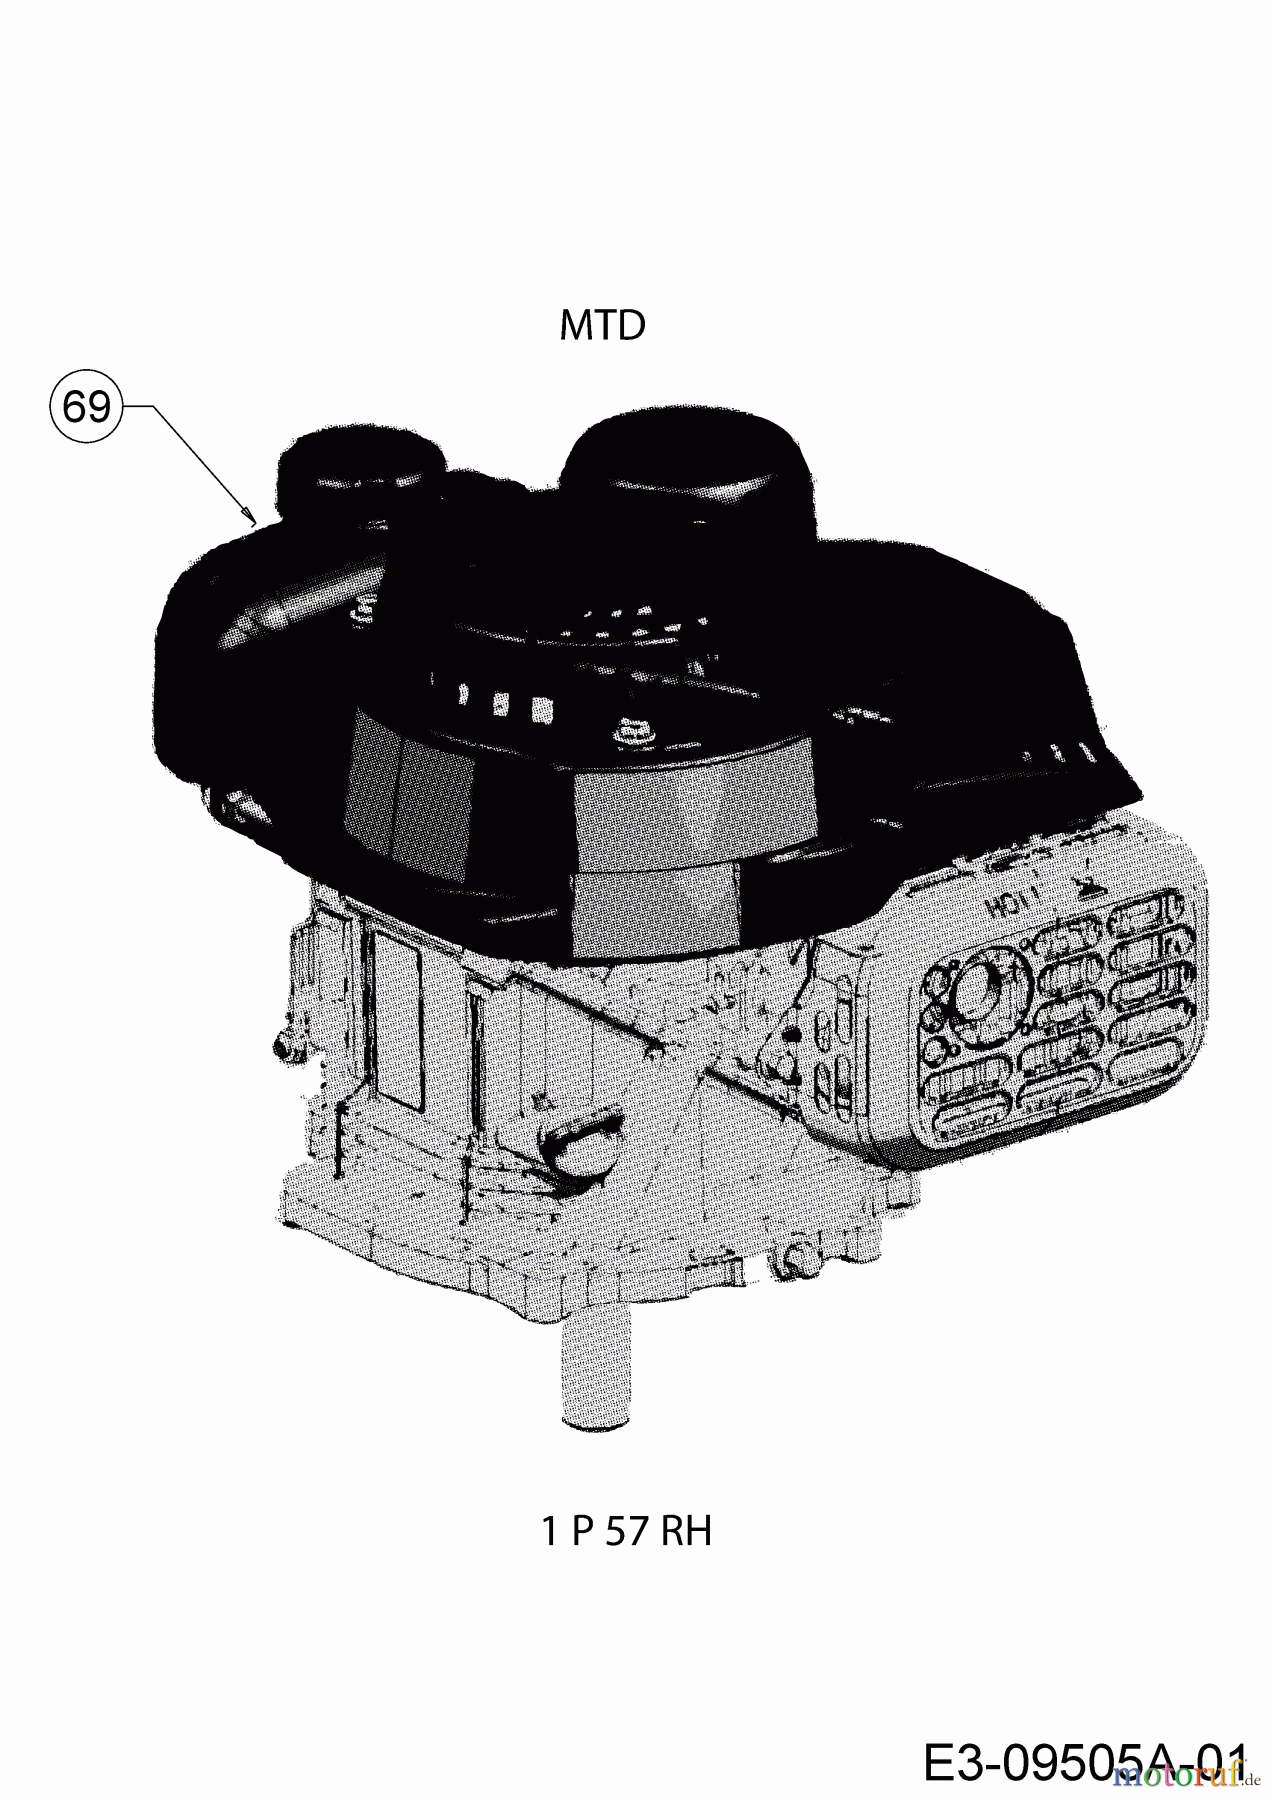  MTD Petrol mower Smart 42 PO 11C-LASJ600  (2018) Engine MTD